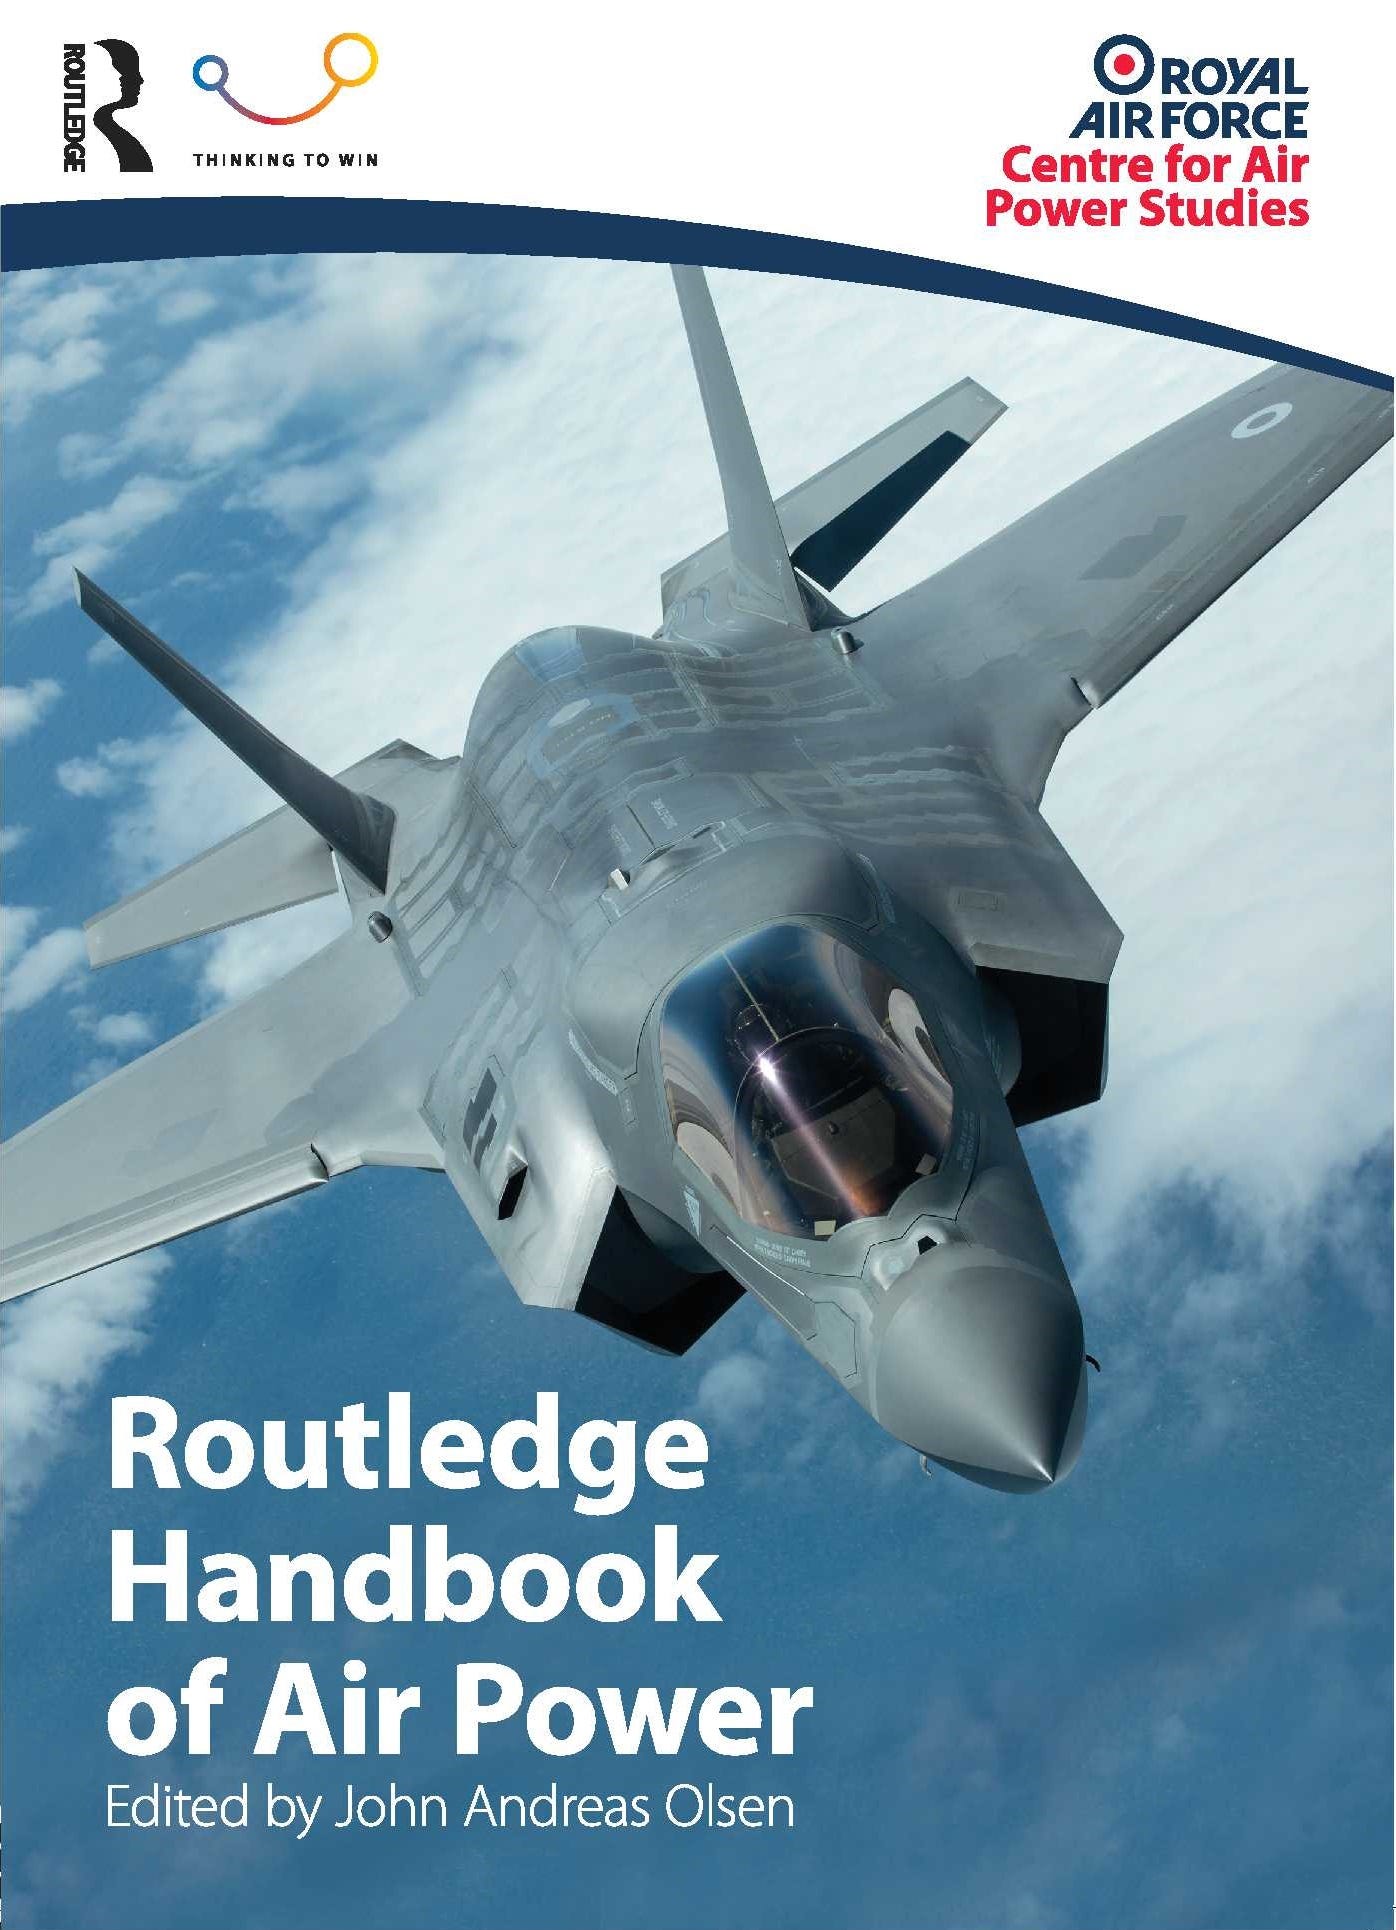 Book Review — Routledge Handbook Of Air Power | By Raf Casps | Raf Casps |  Medium